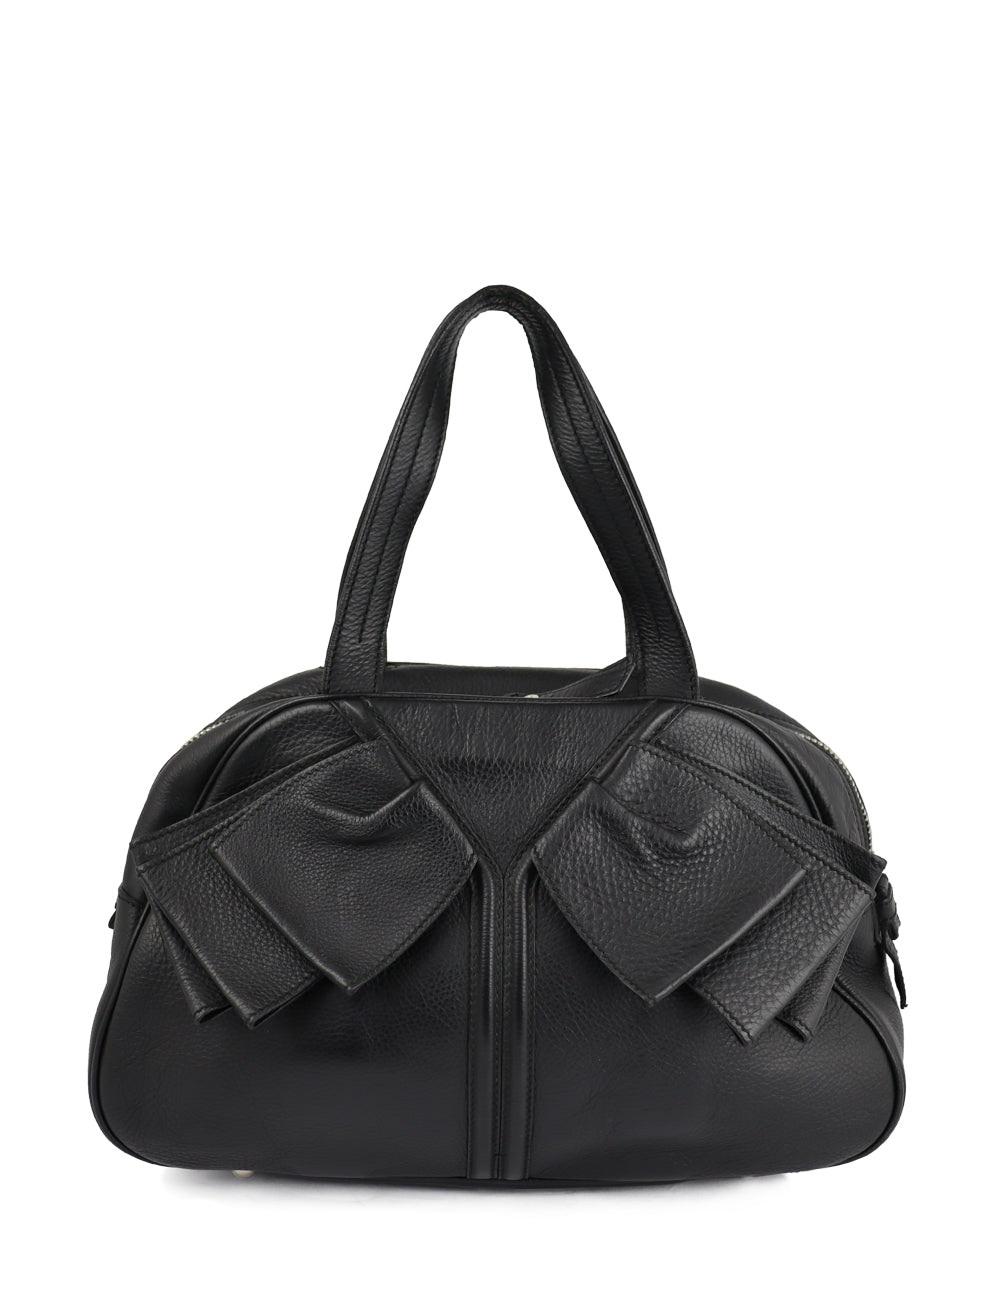 Yves Saint Laurent Black Leather Handbag For Sale